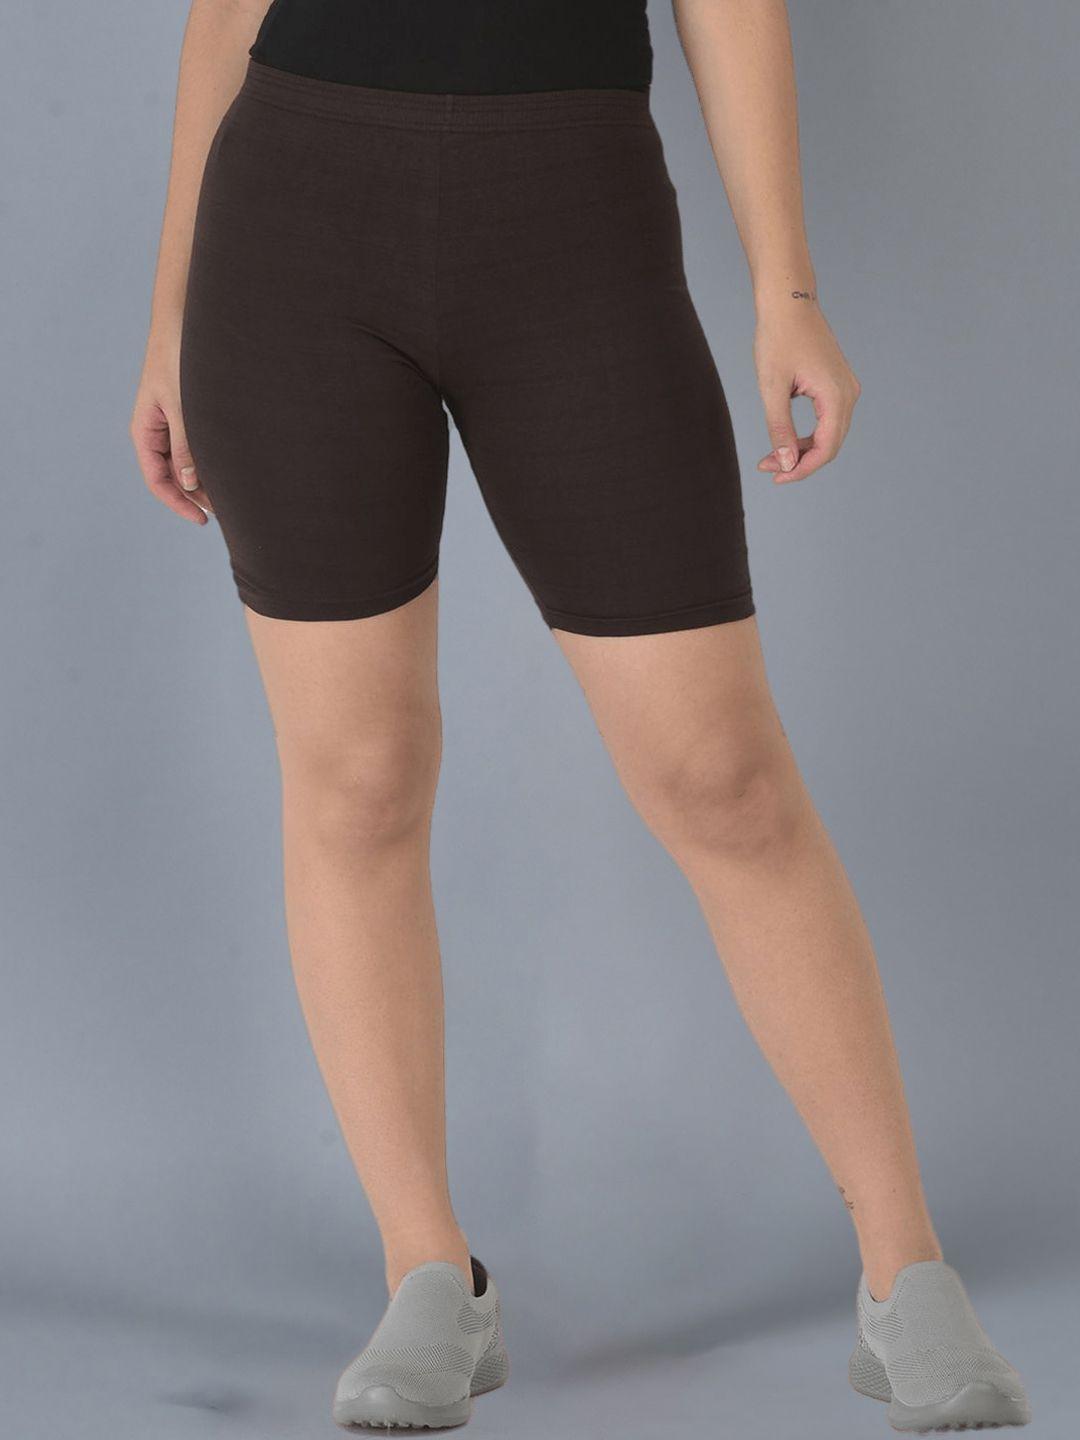 dollar-missy-women-skinny-fit-pure-cotton-sports-shorts